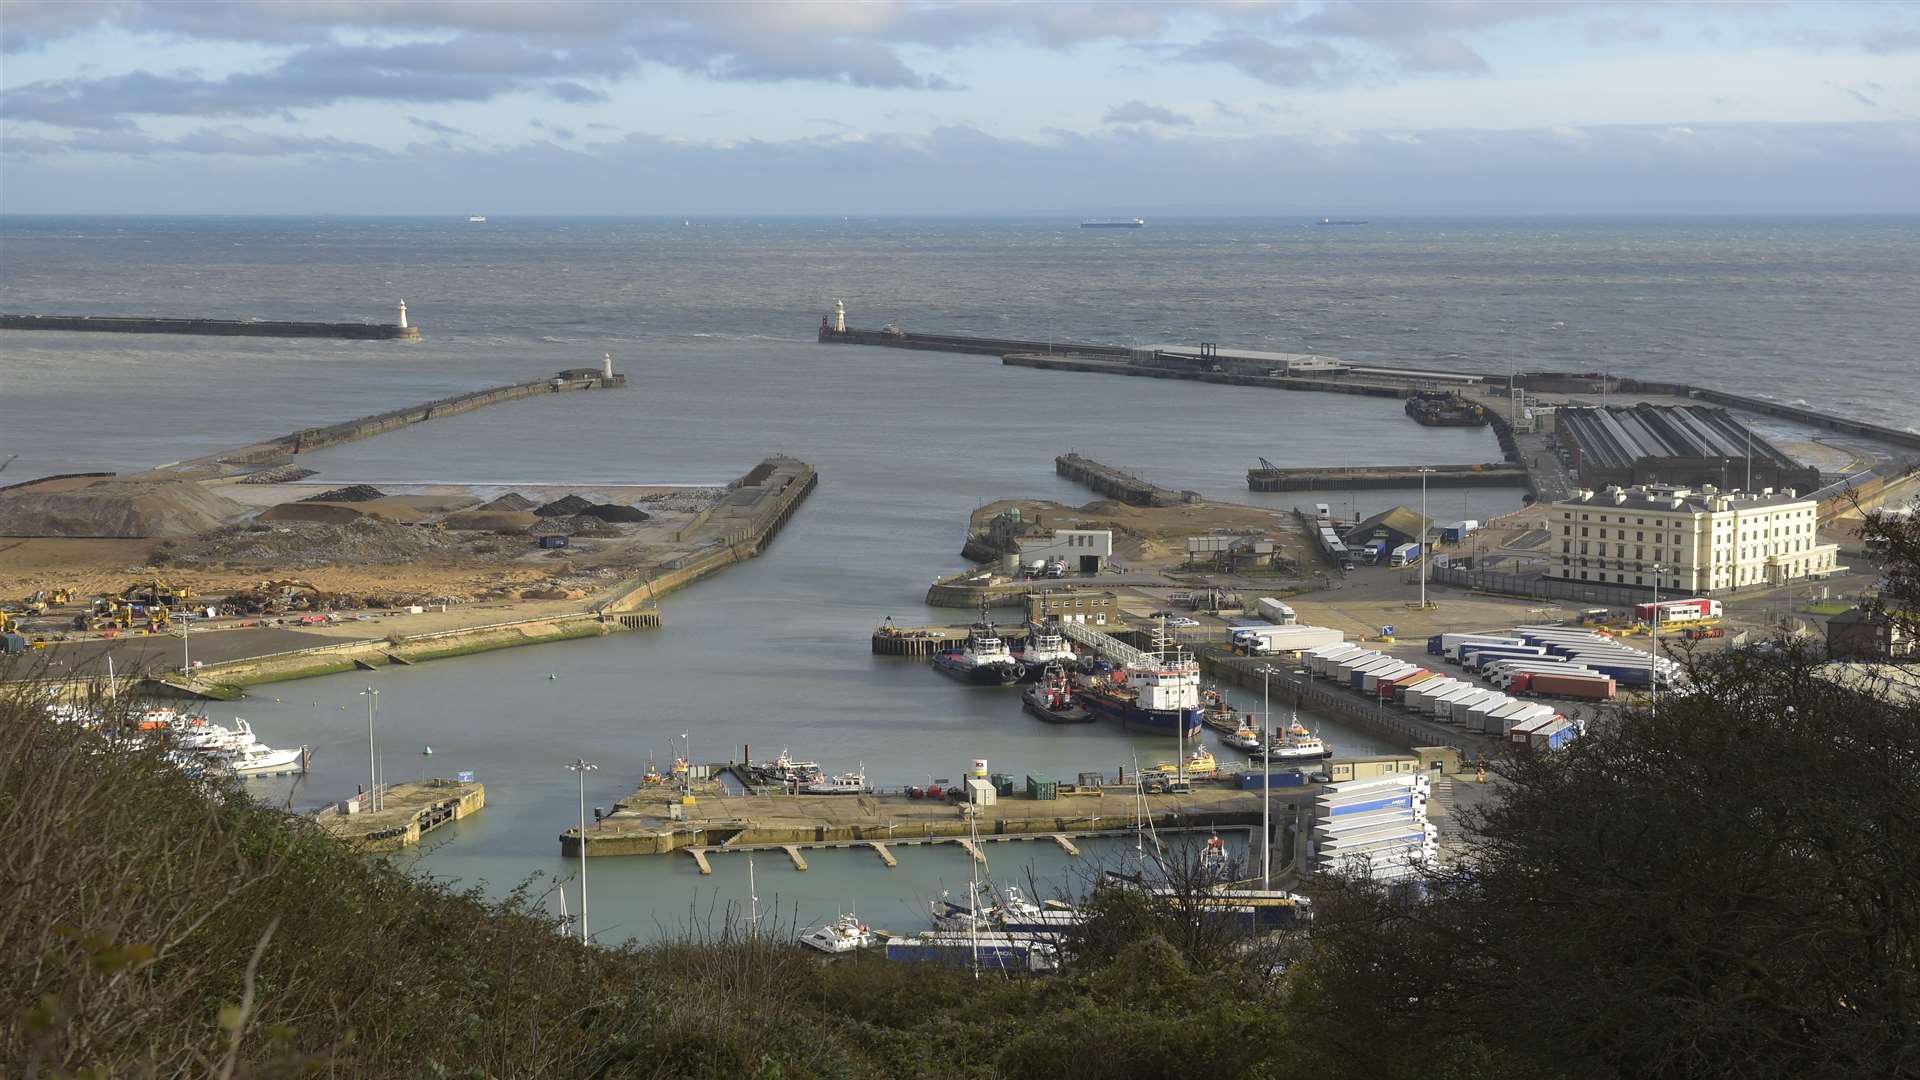 The Dover Western Docks